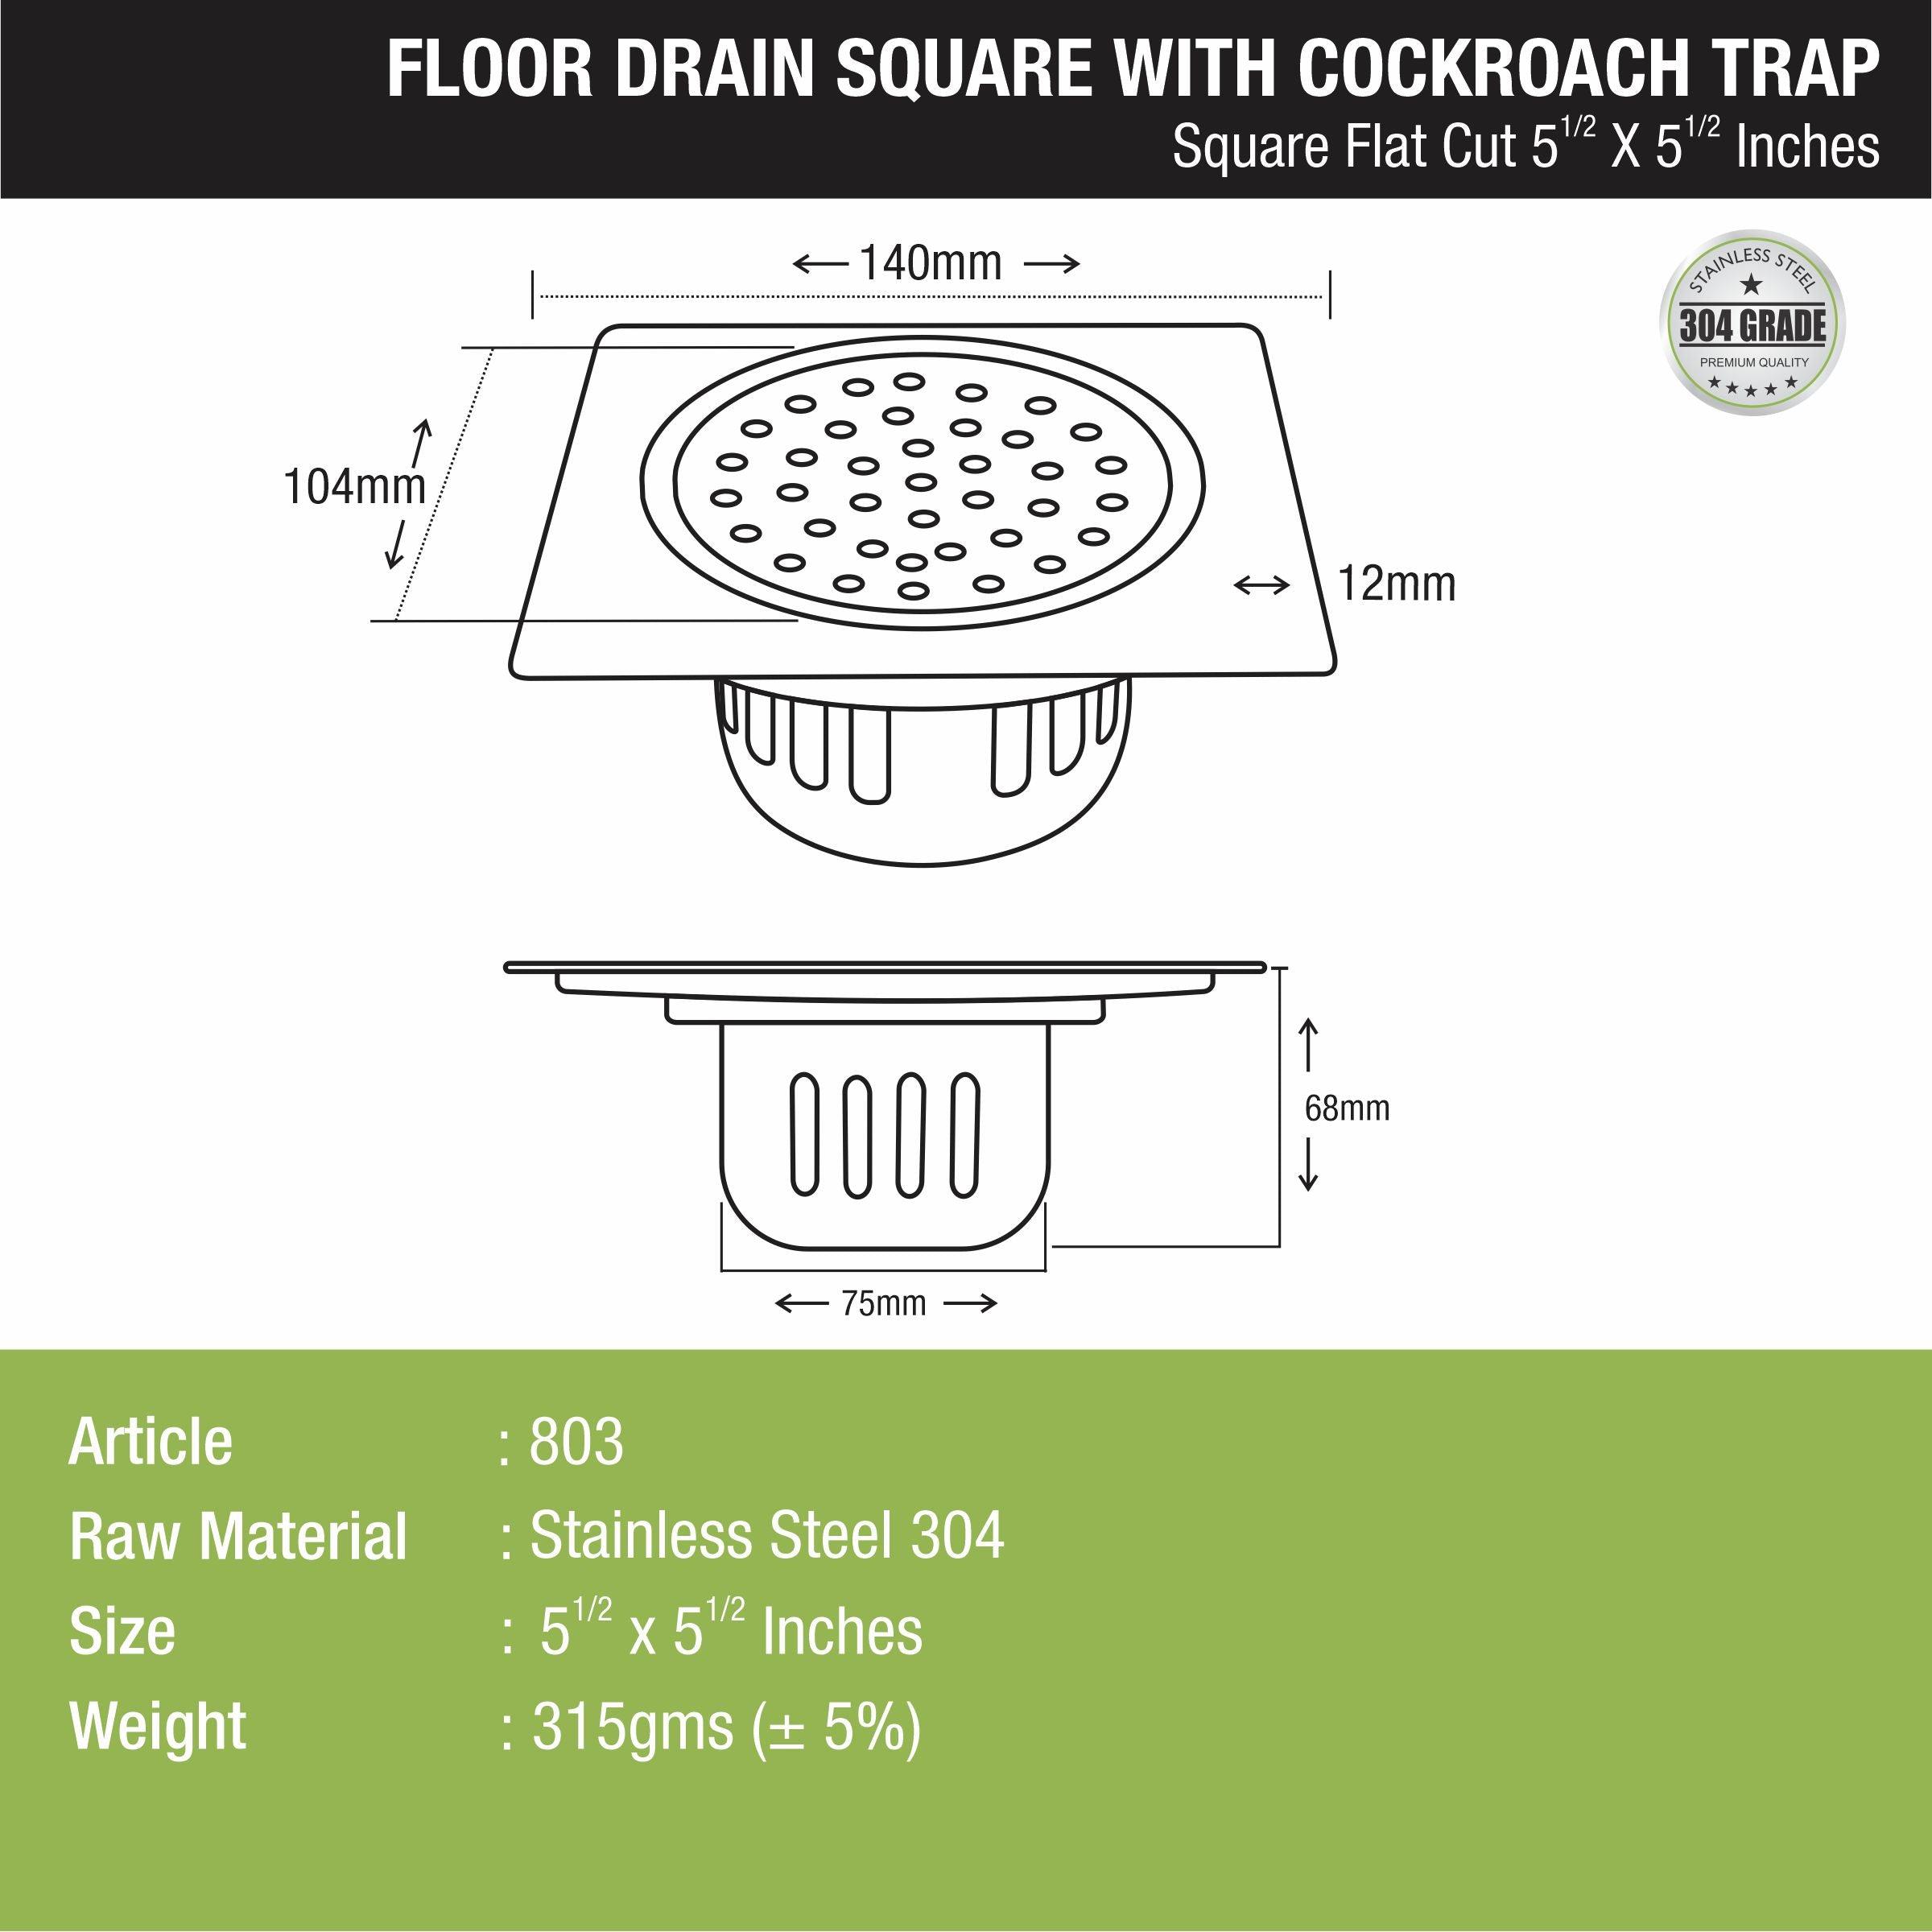 Square Flat Cut Floor Drain (5.5 x 5.5 Inches) with Cockroach Trap - LIPKA - Lipka Home